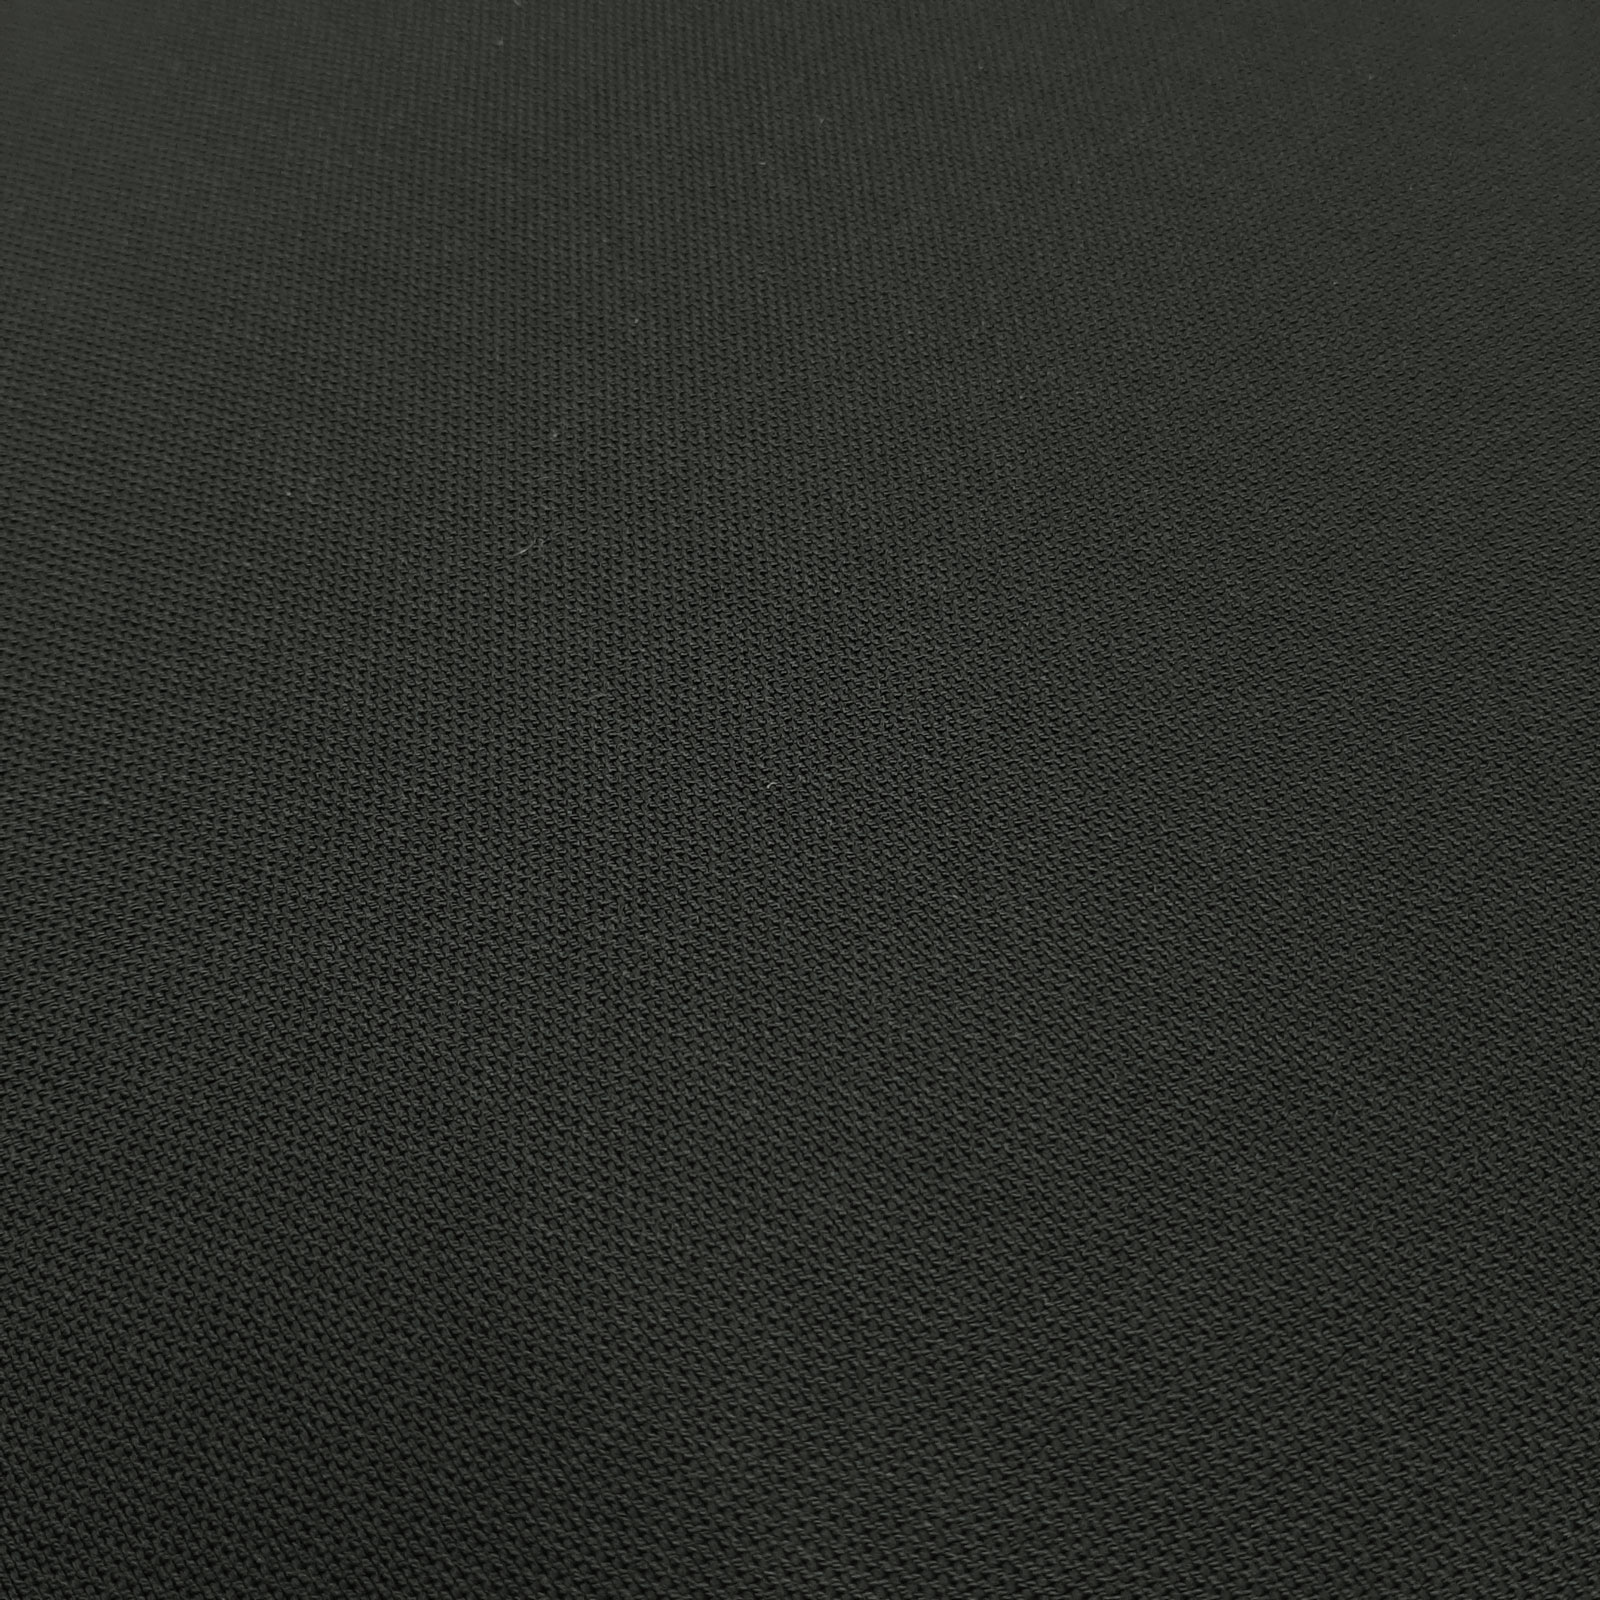 Delmiros - Laminado Keprotec® de 3 camadas - Private Black - por 10 cm